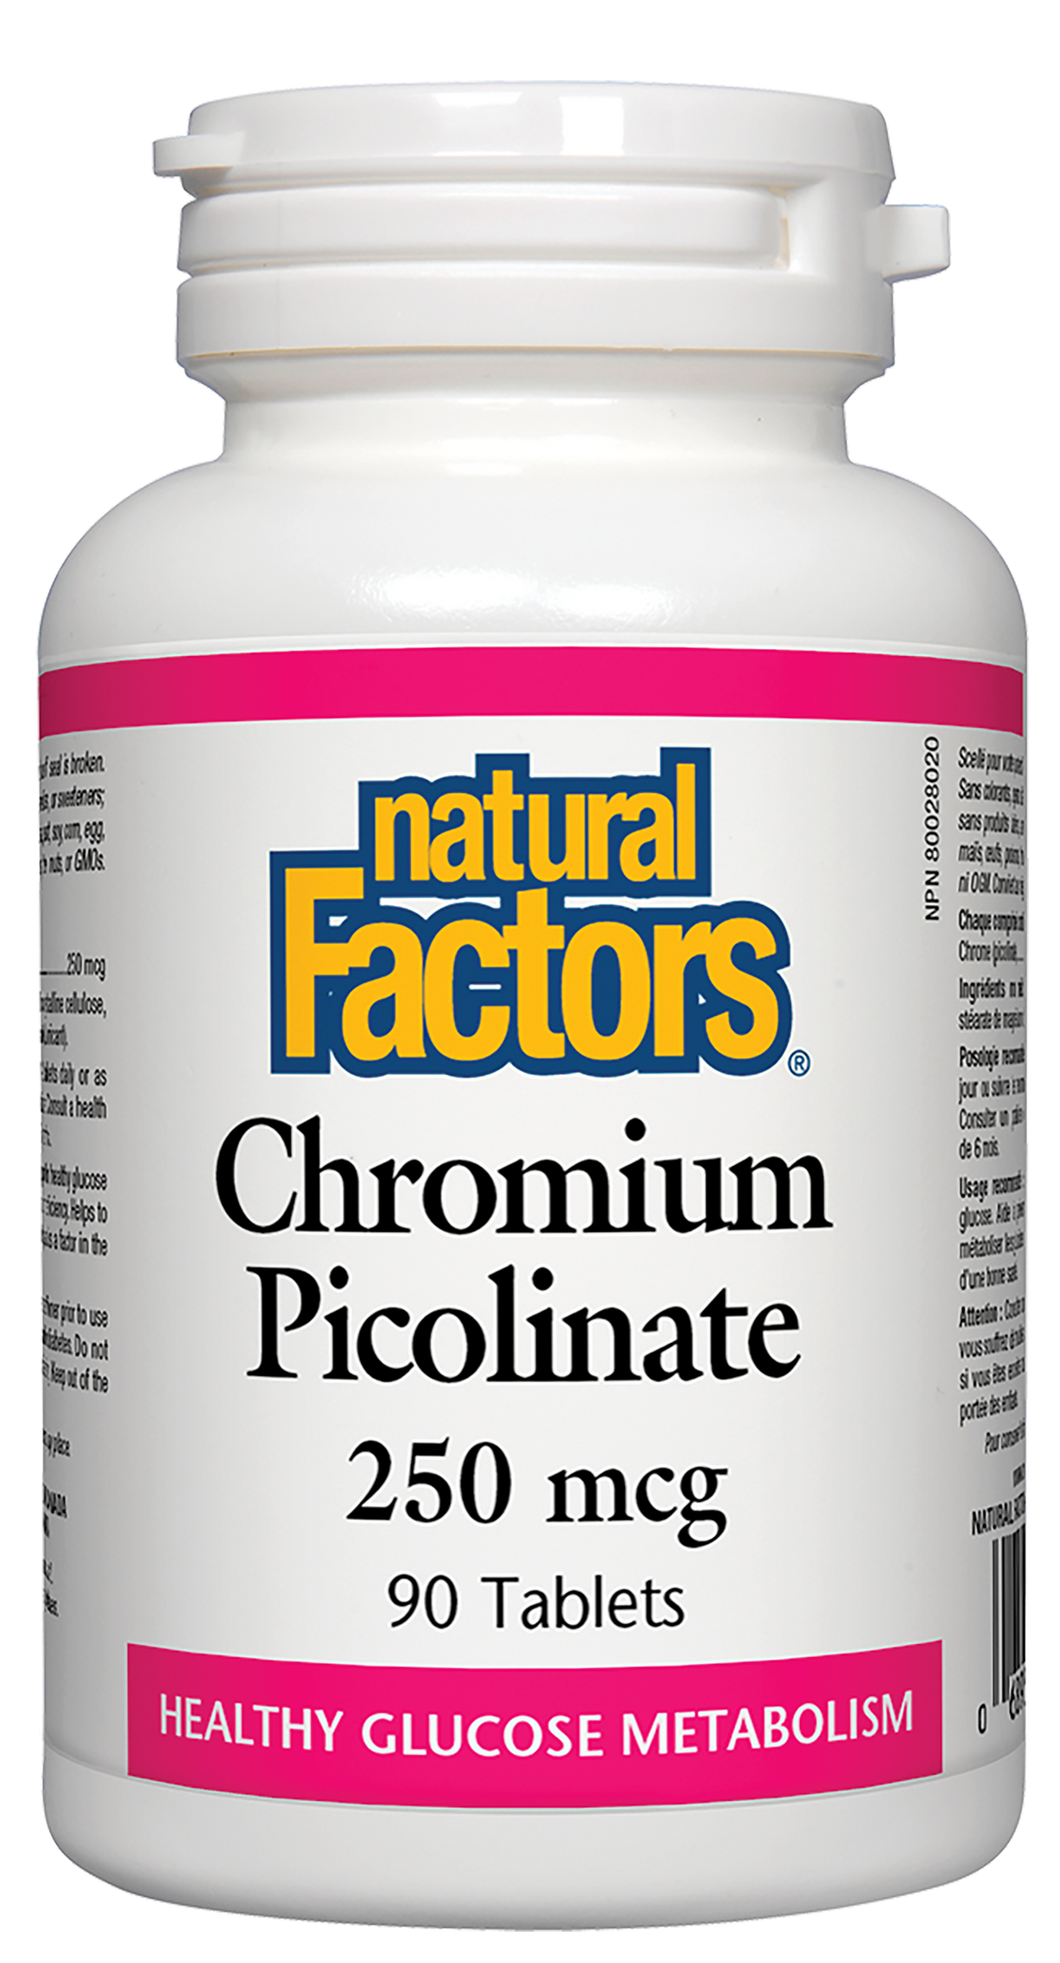 Natural Factors Chromium Picolinate 250 mcg enhances a healthy glucose metabolism.